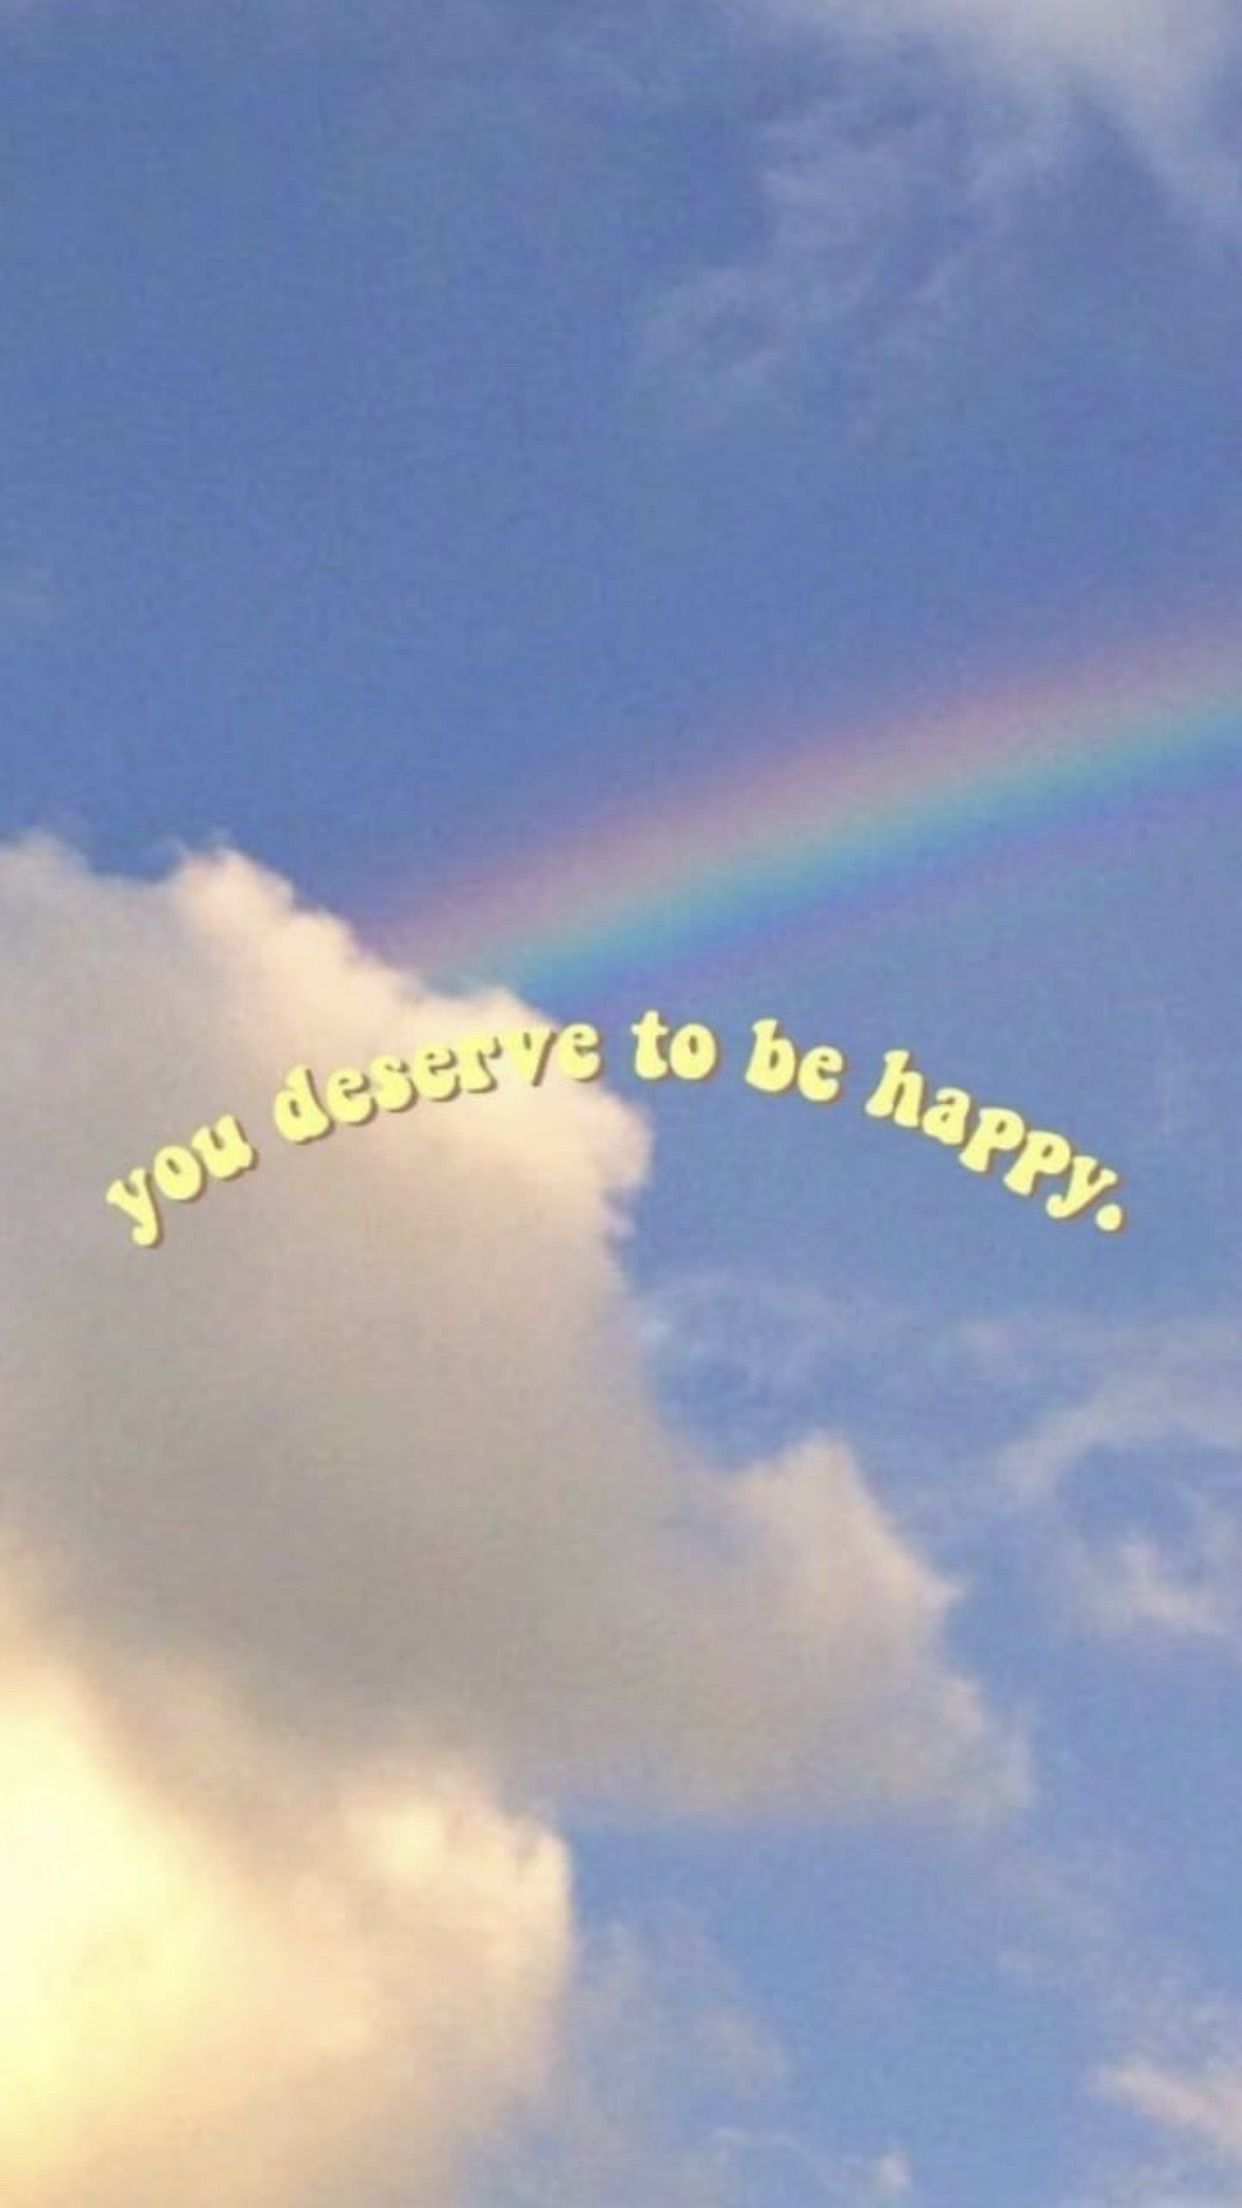 You deserve to be happy. - Calming, rainbows, happy